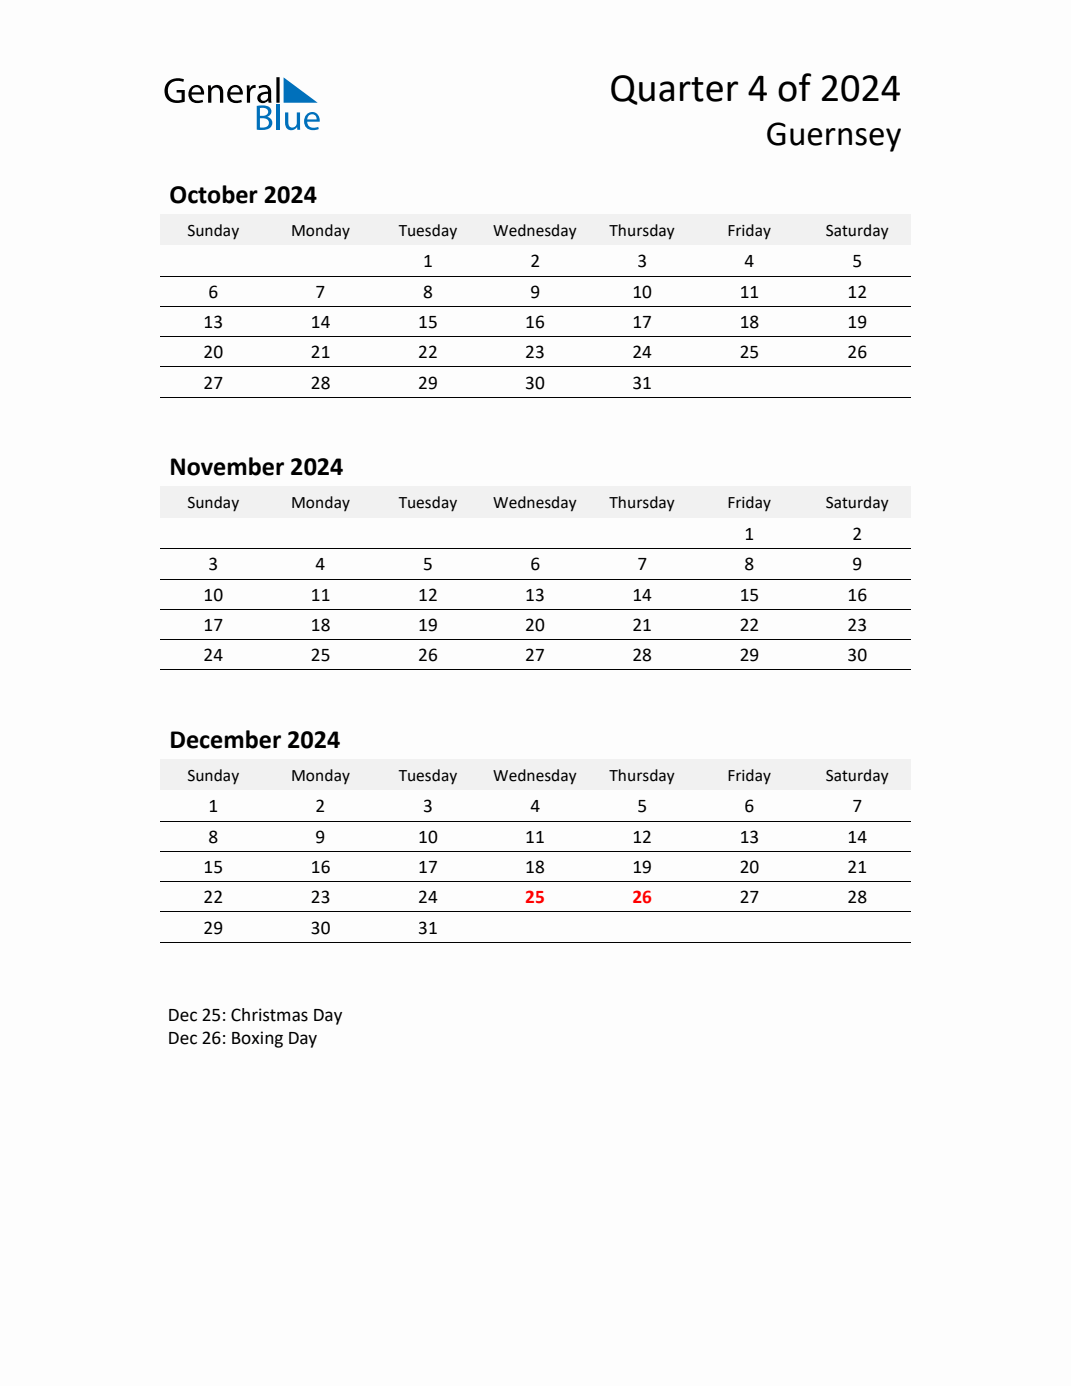 q4-2024-quarterly-calendar-with-guernsey-holidays